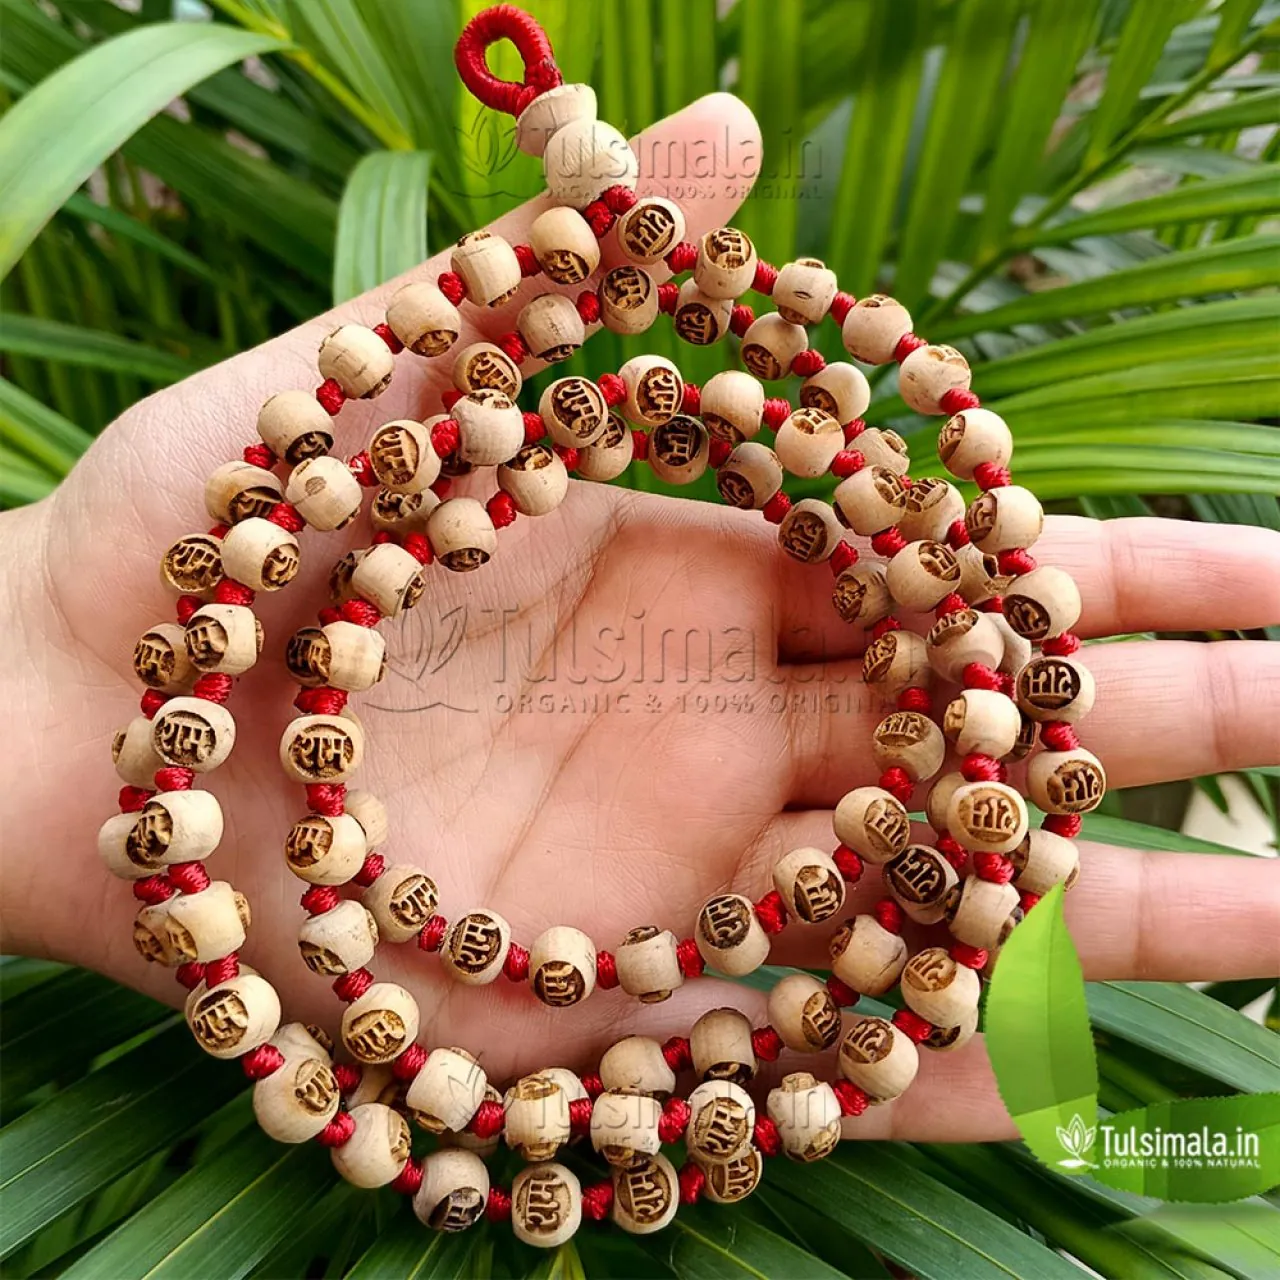 Natural Wood Color Sandalwood beads Bracelet at Rs 1200/piece in Jaipur |  ID: 4233615873